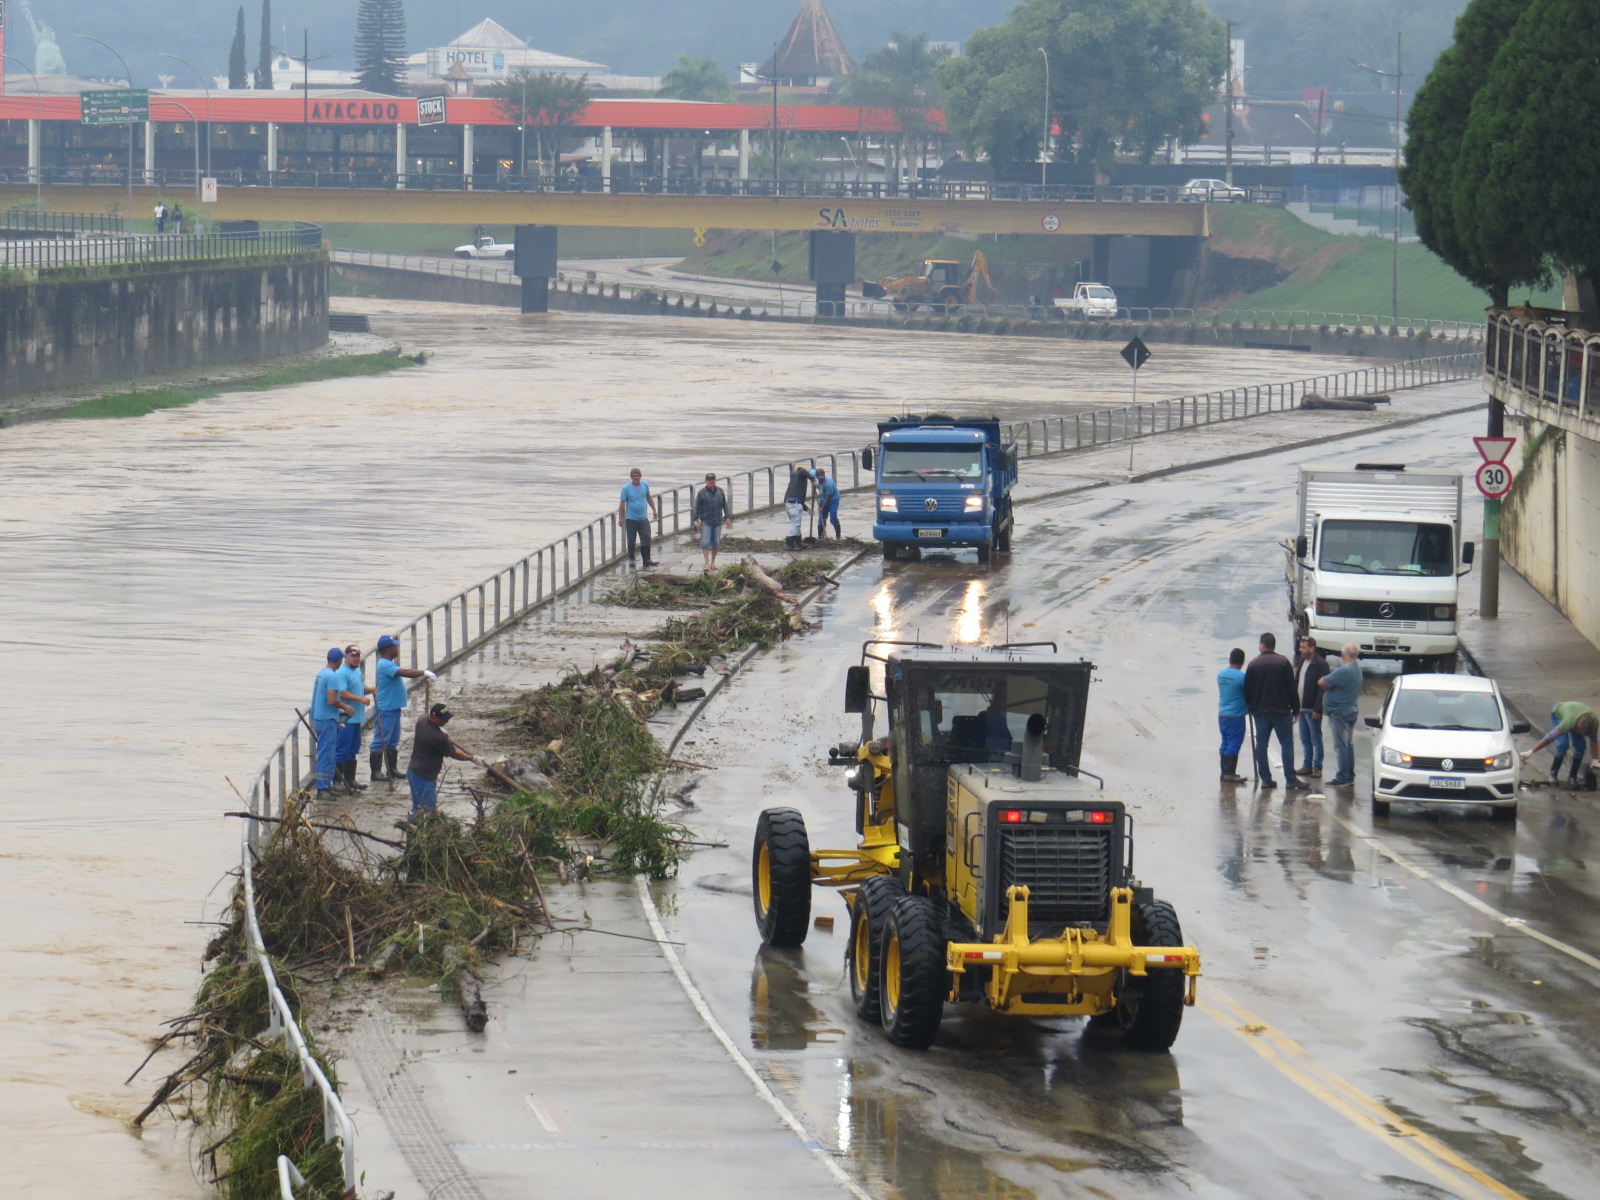 Secretaria de Obras intensifica trabalhos de limpeza na Beira Rio, após fortes chuvas